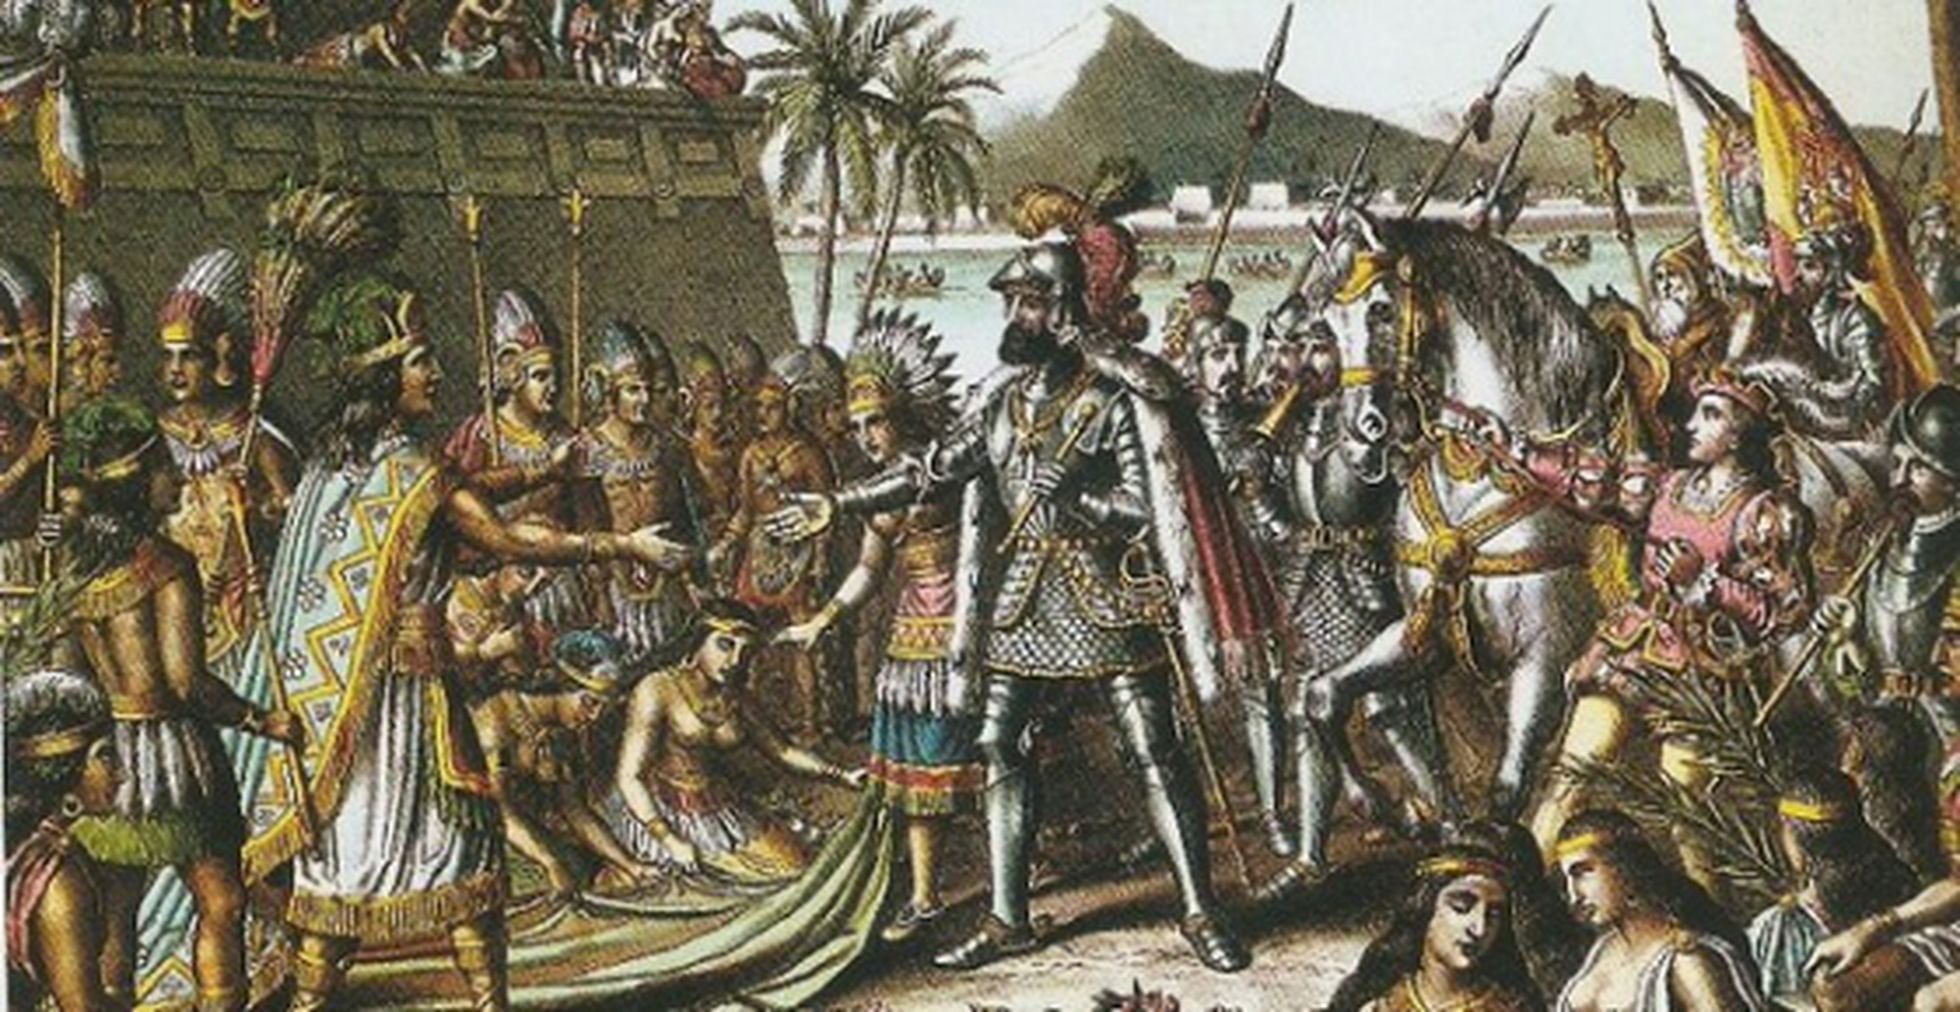 Cortes aztec empire spanish conquistador azteca did hernan medieval battle collision worlds warfare maya cultura vs mesoamerican conquest españoles conquista